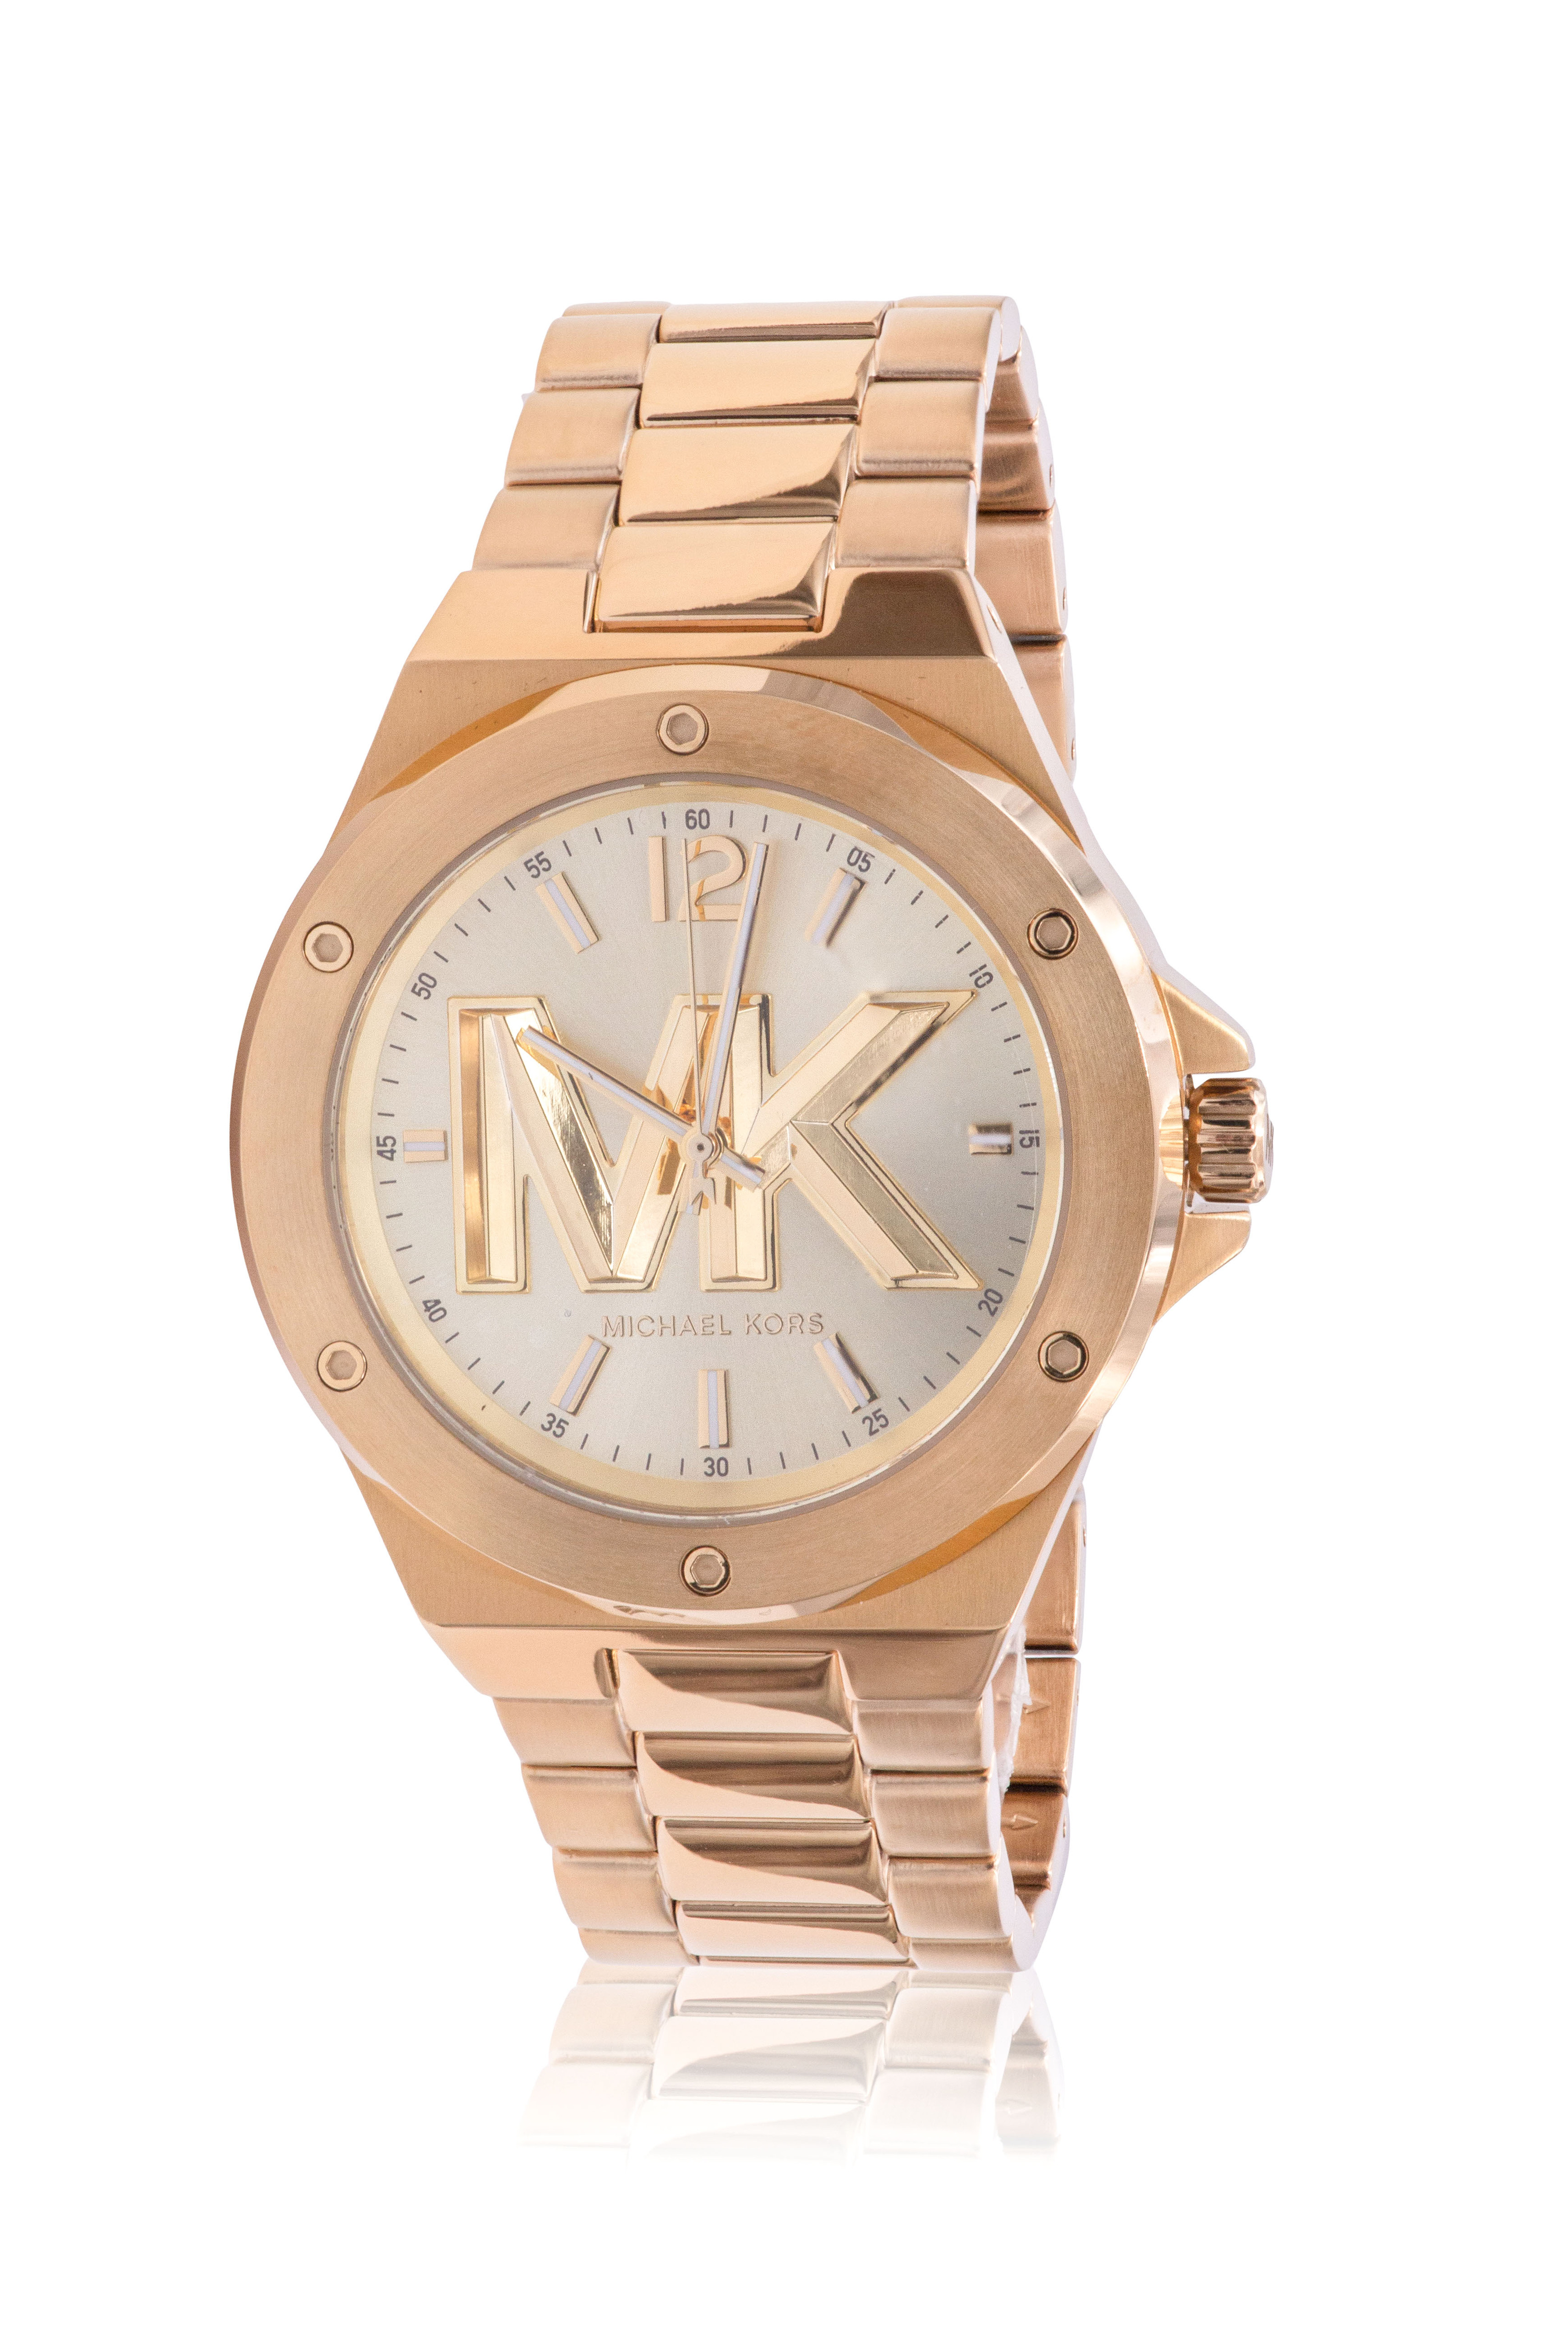 Michael Kors Lennox Gold-Tone Mens Watch MK8939 - Jacob Time Inc